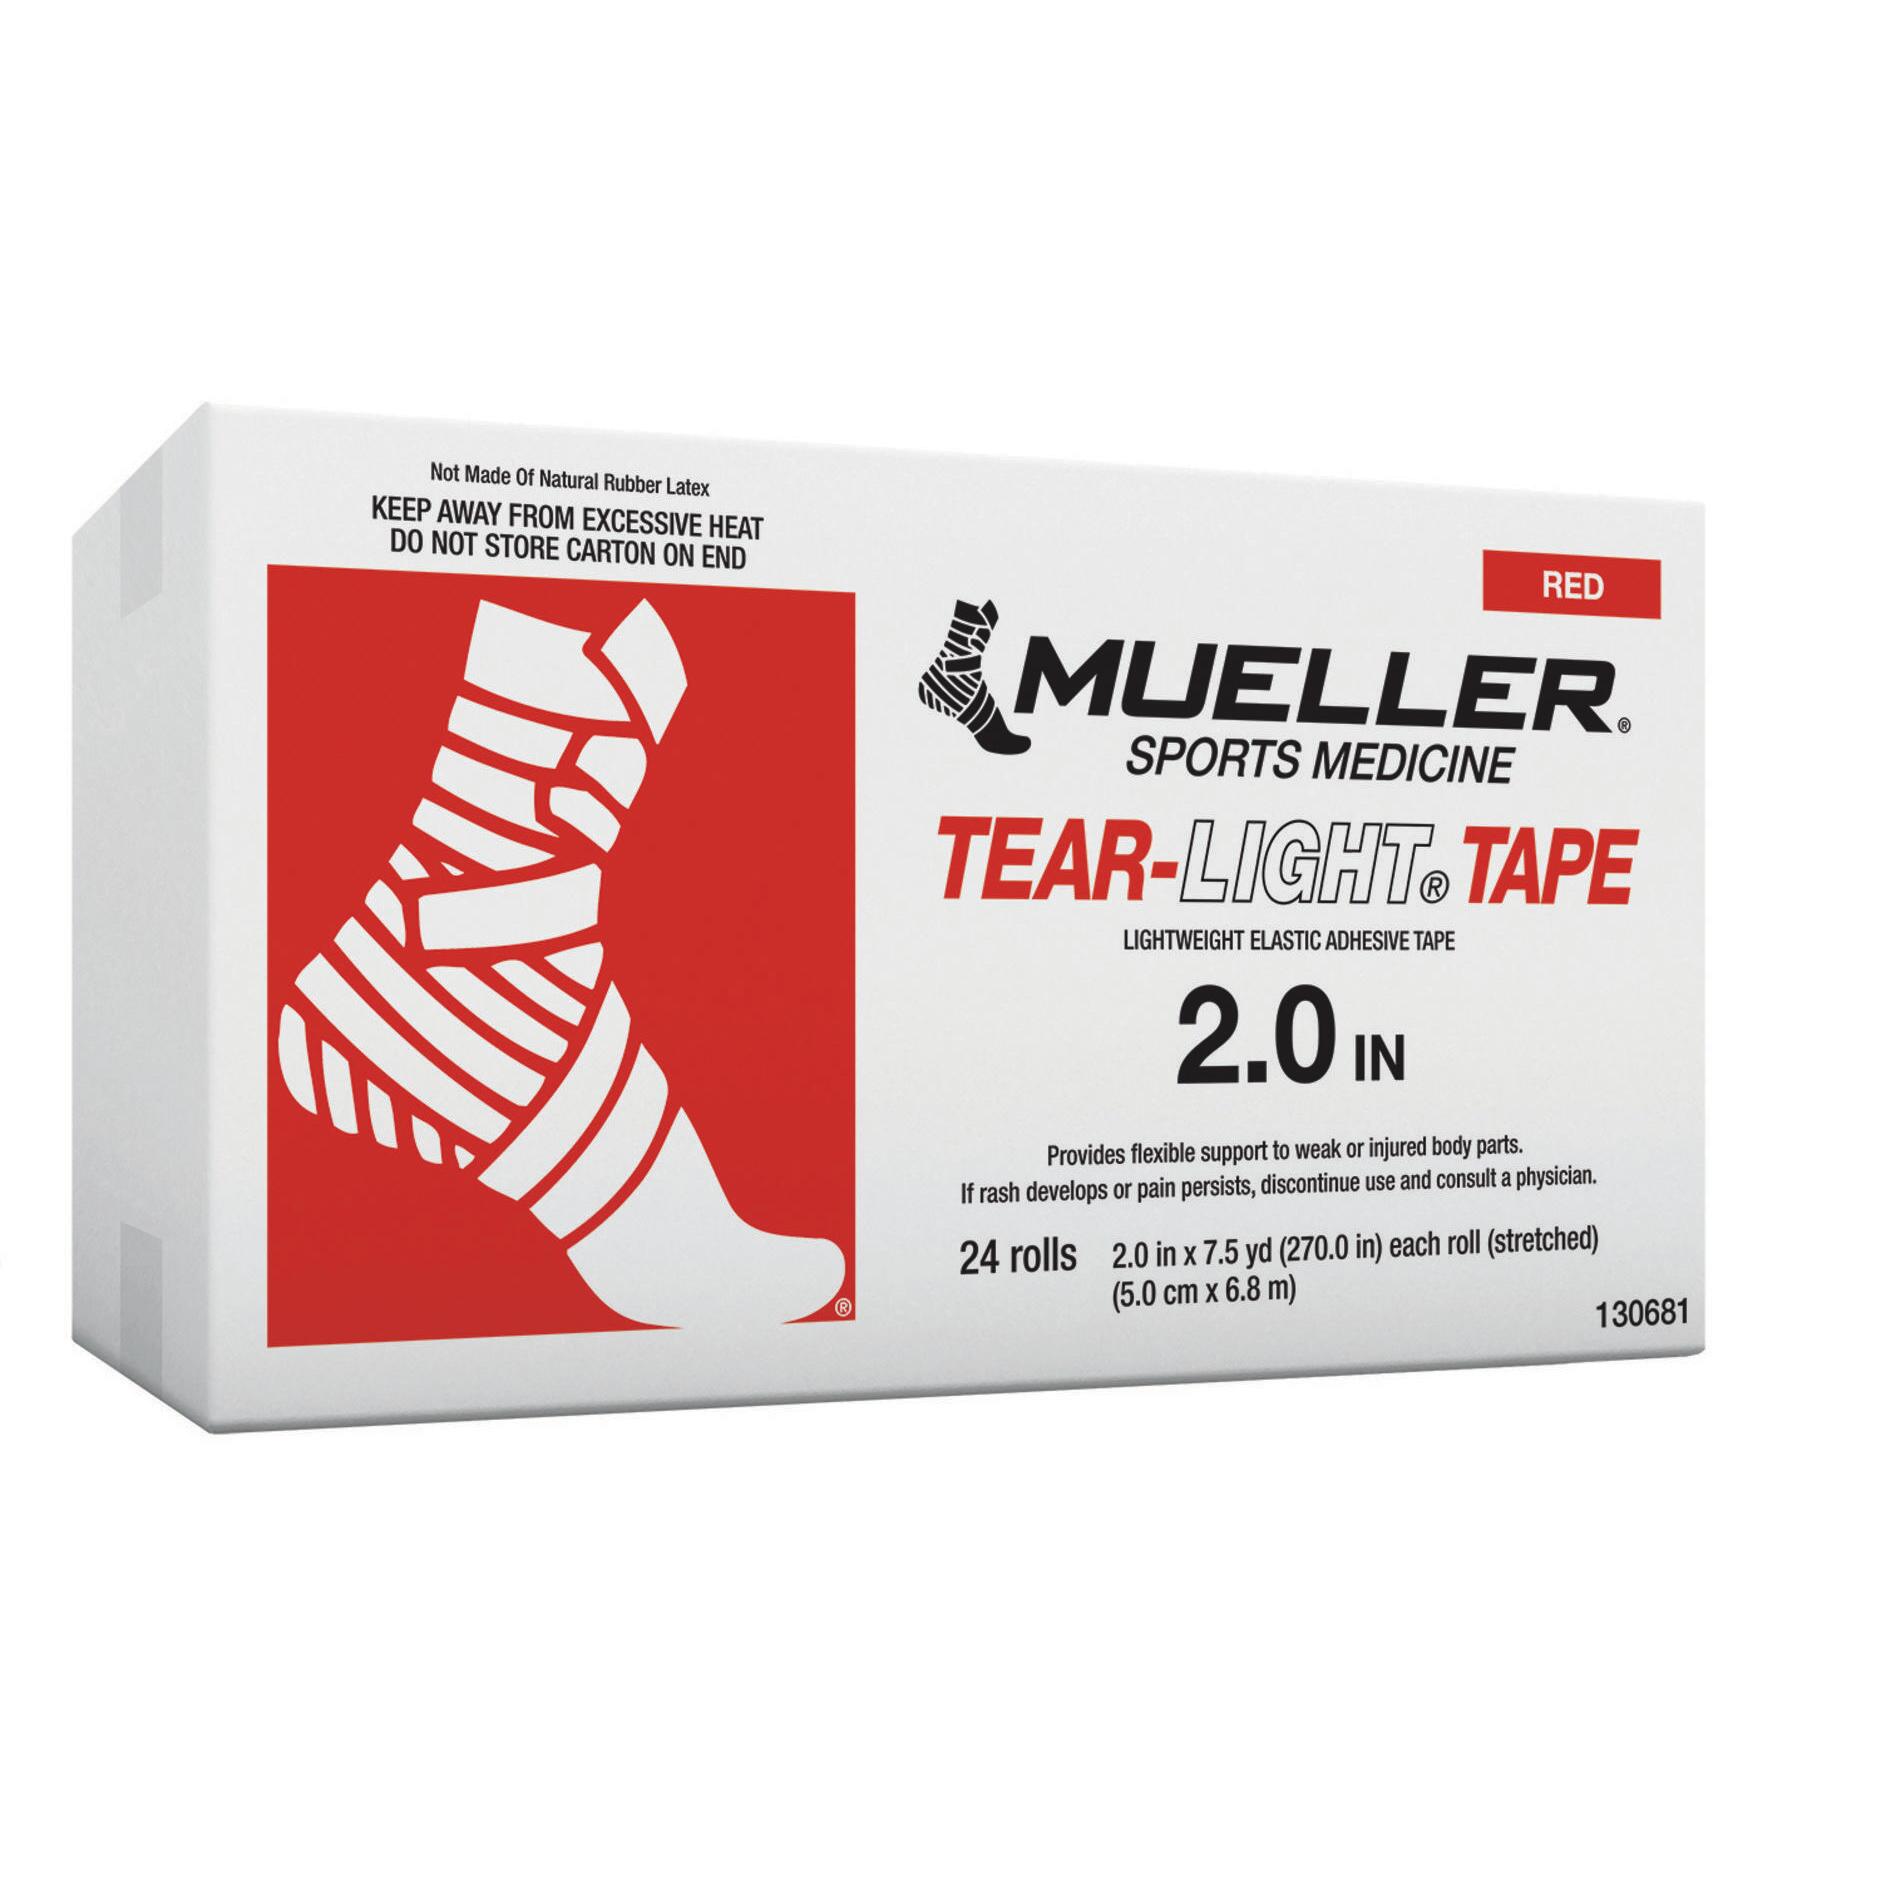 Mueller Muscle Support Tear-Light Tape Red 5cm x 6.8m - 24 Rolls 1/2